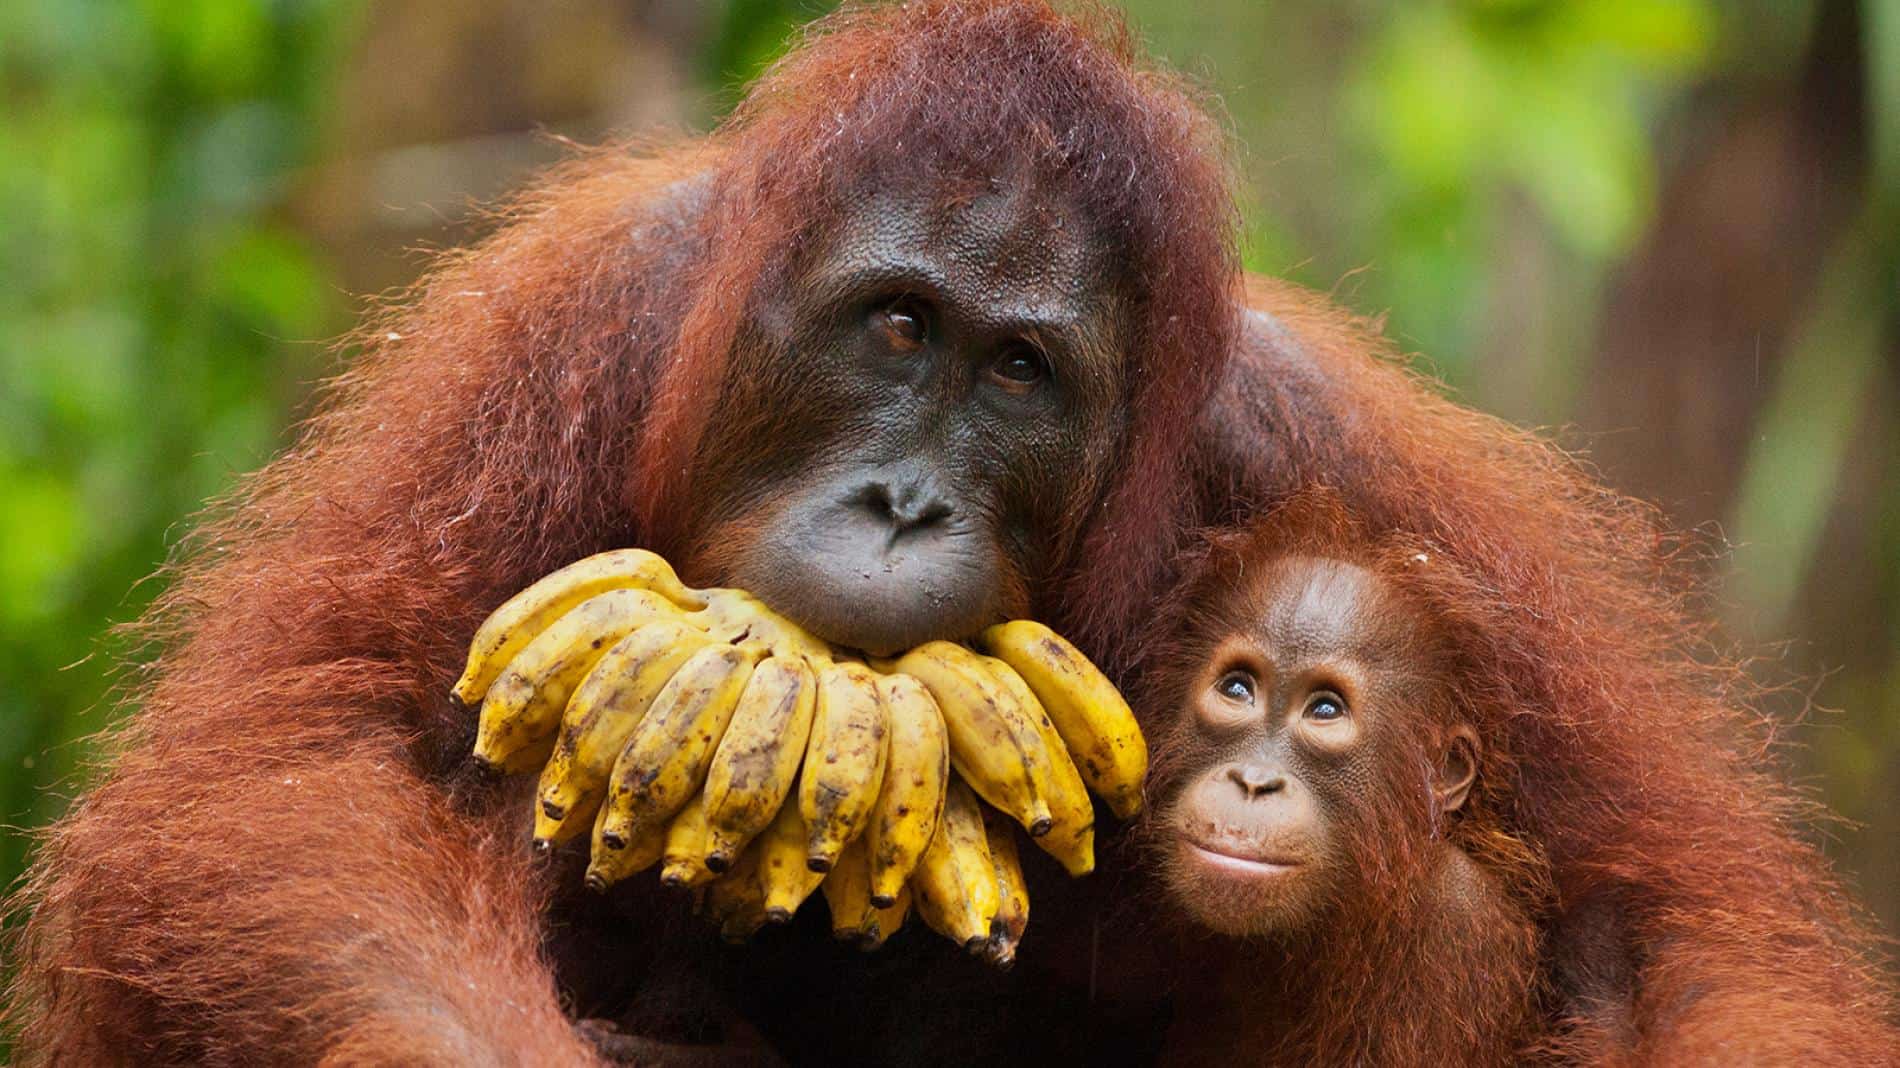  Orangutan  Facts Worksheets Habitat Anatomy and Life 